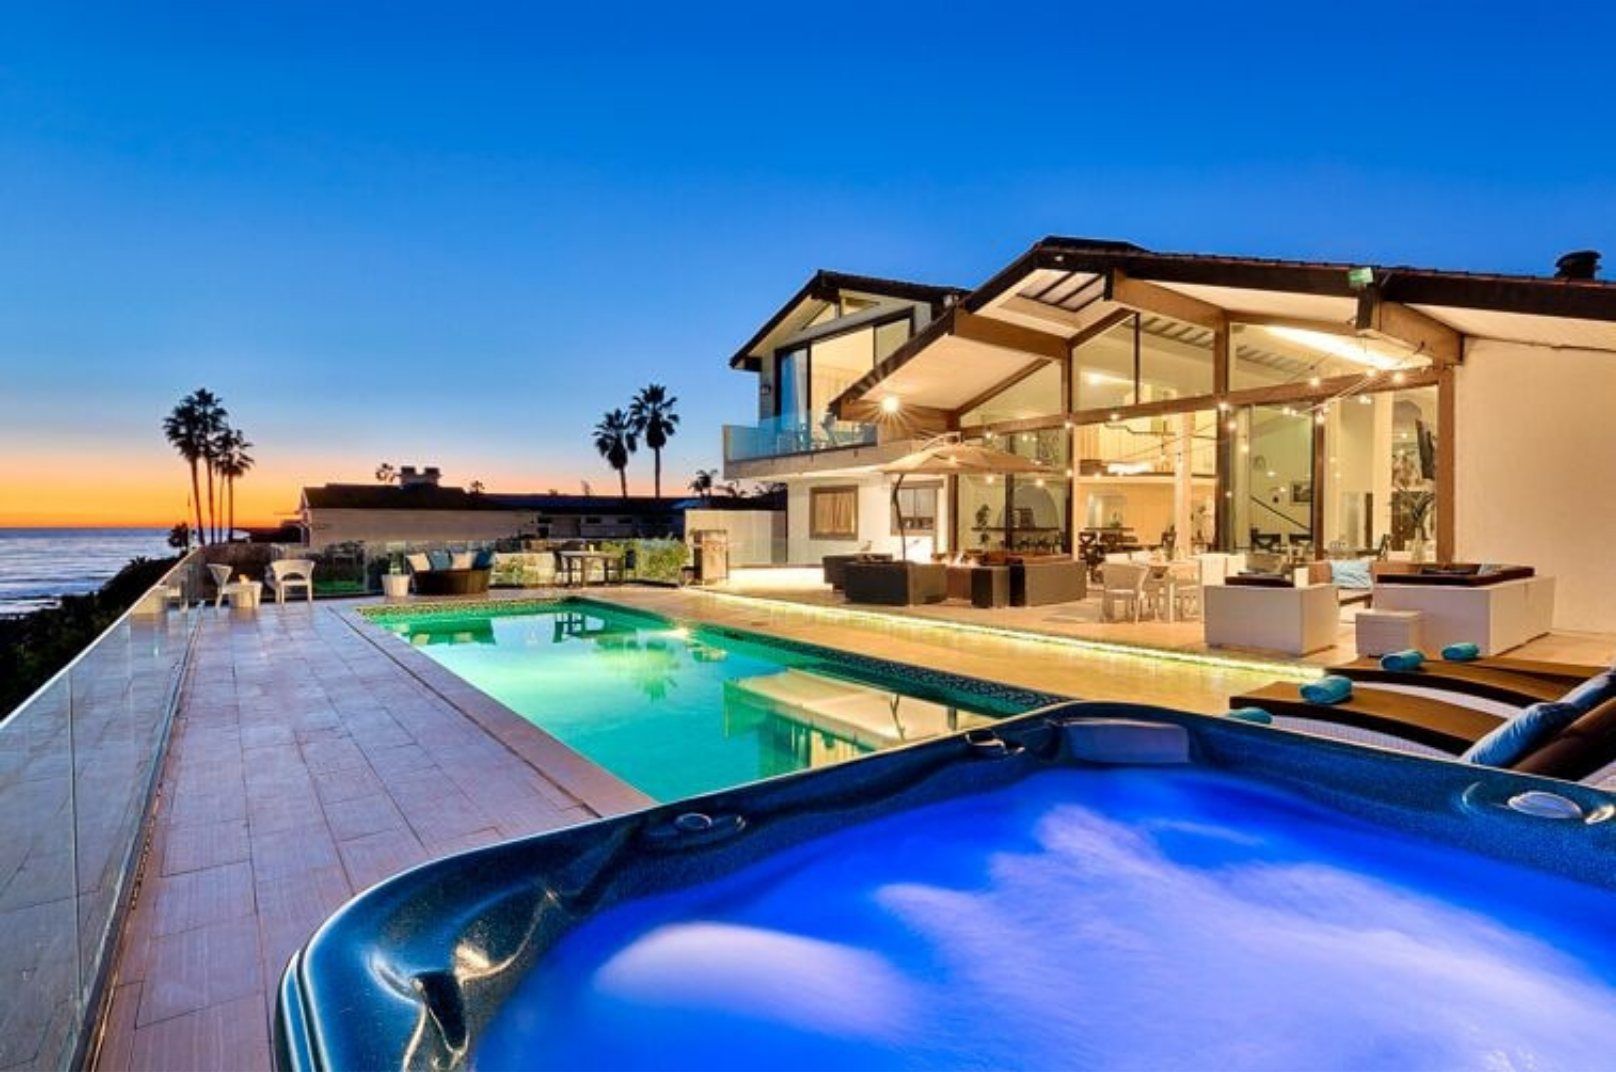 San Diego luxury vacation home rentals